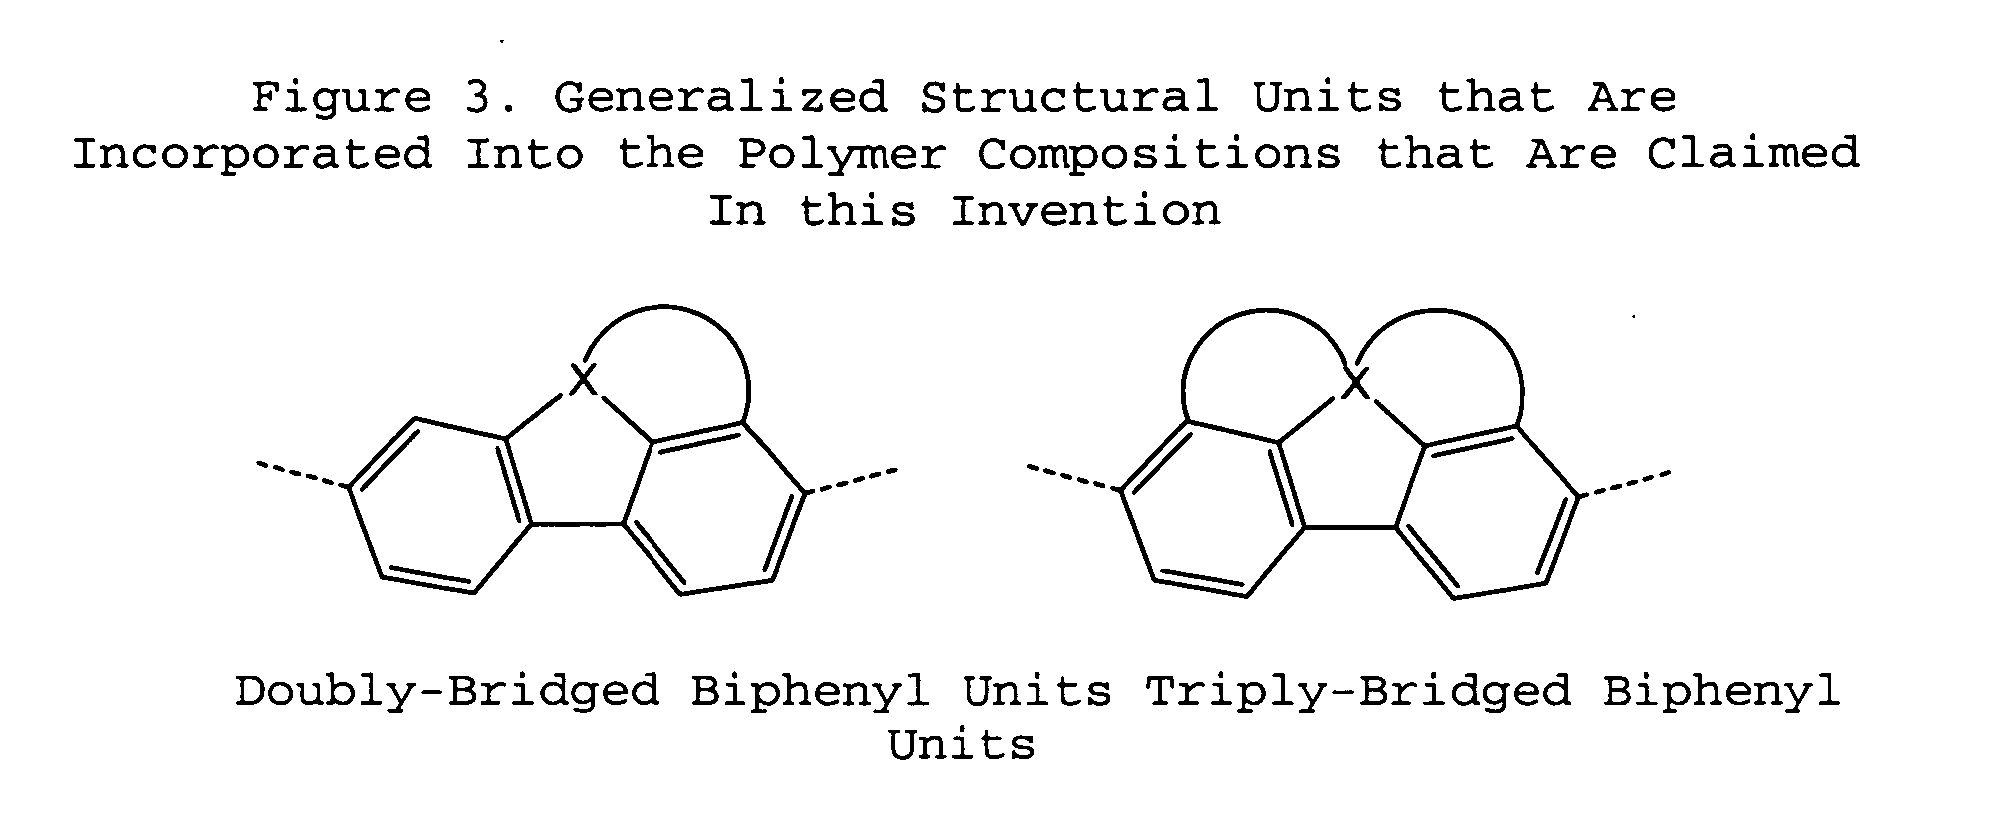 Class of bridged biphenylene polymers